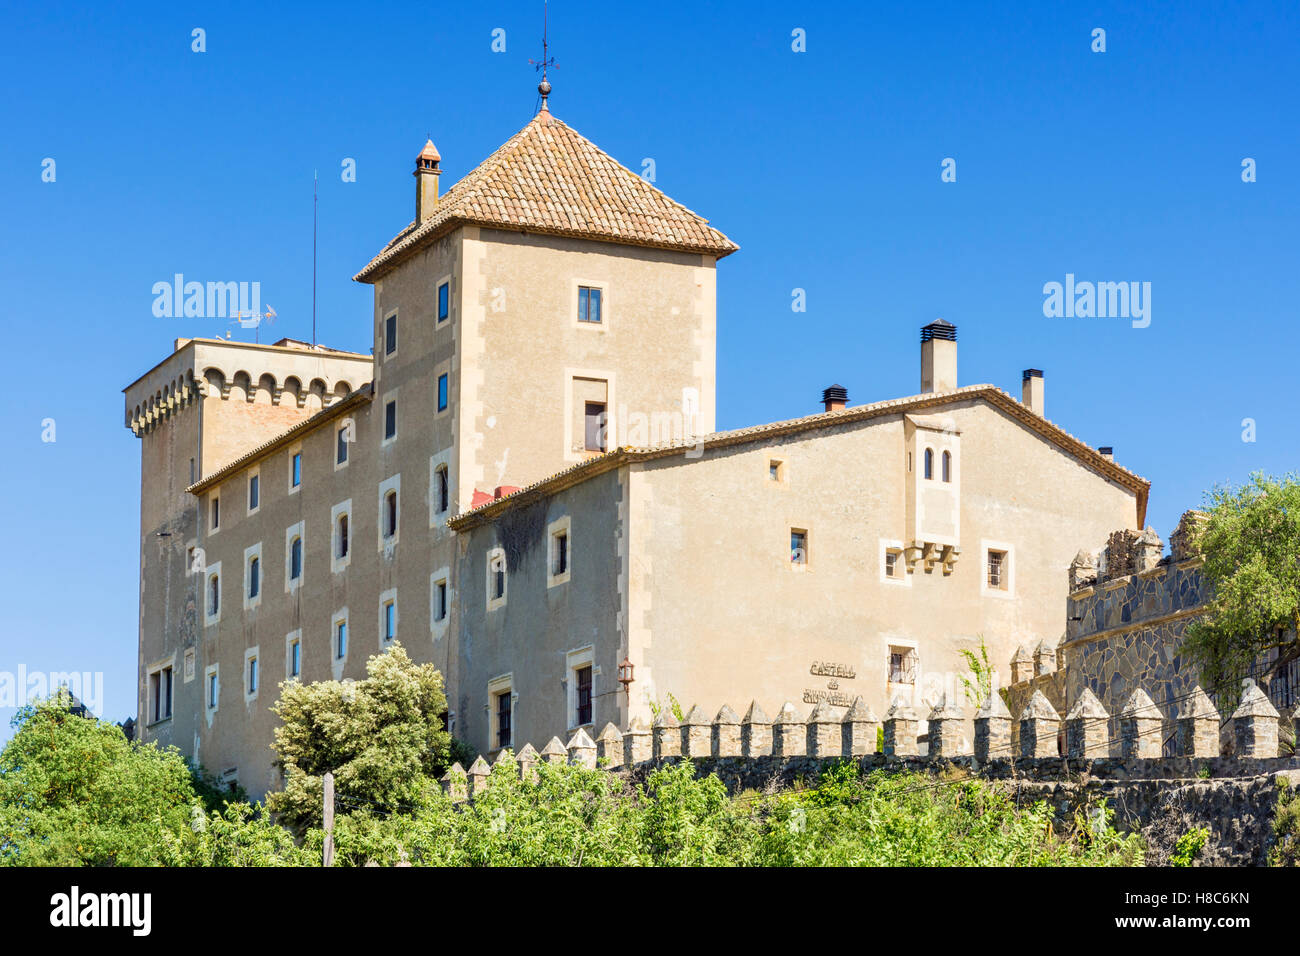 The fortified mansion Castell de Riudabella, Vimbodí, Tarragona, Spain Stock Photo